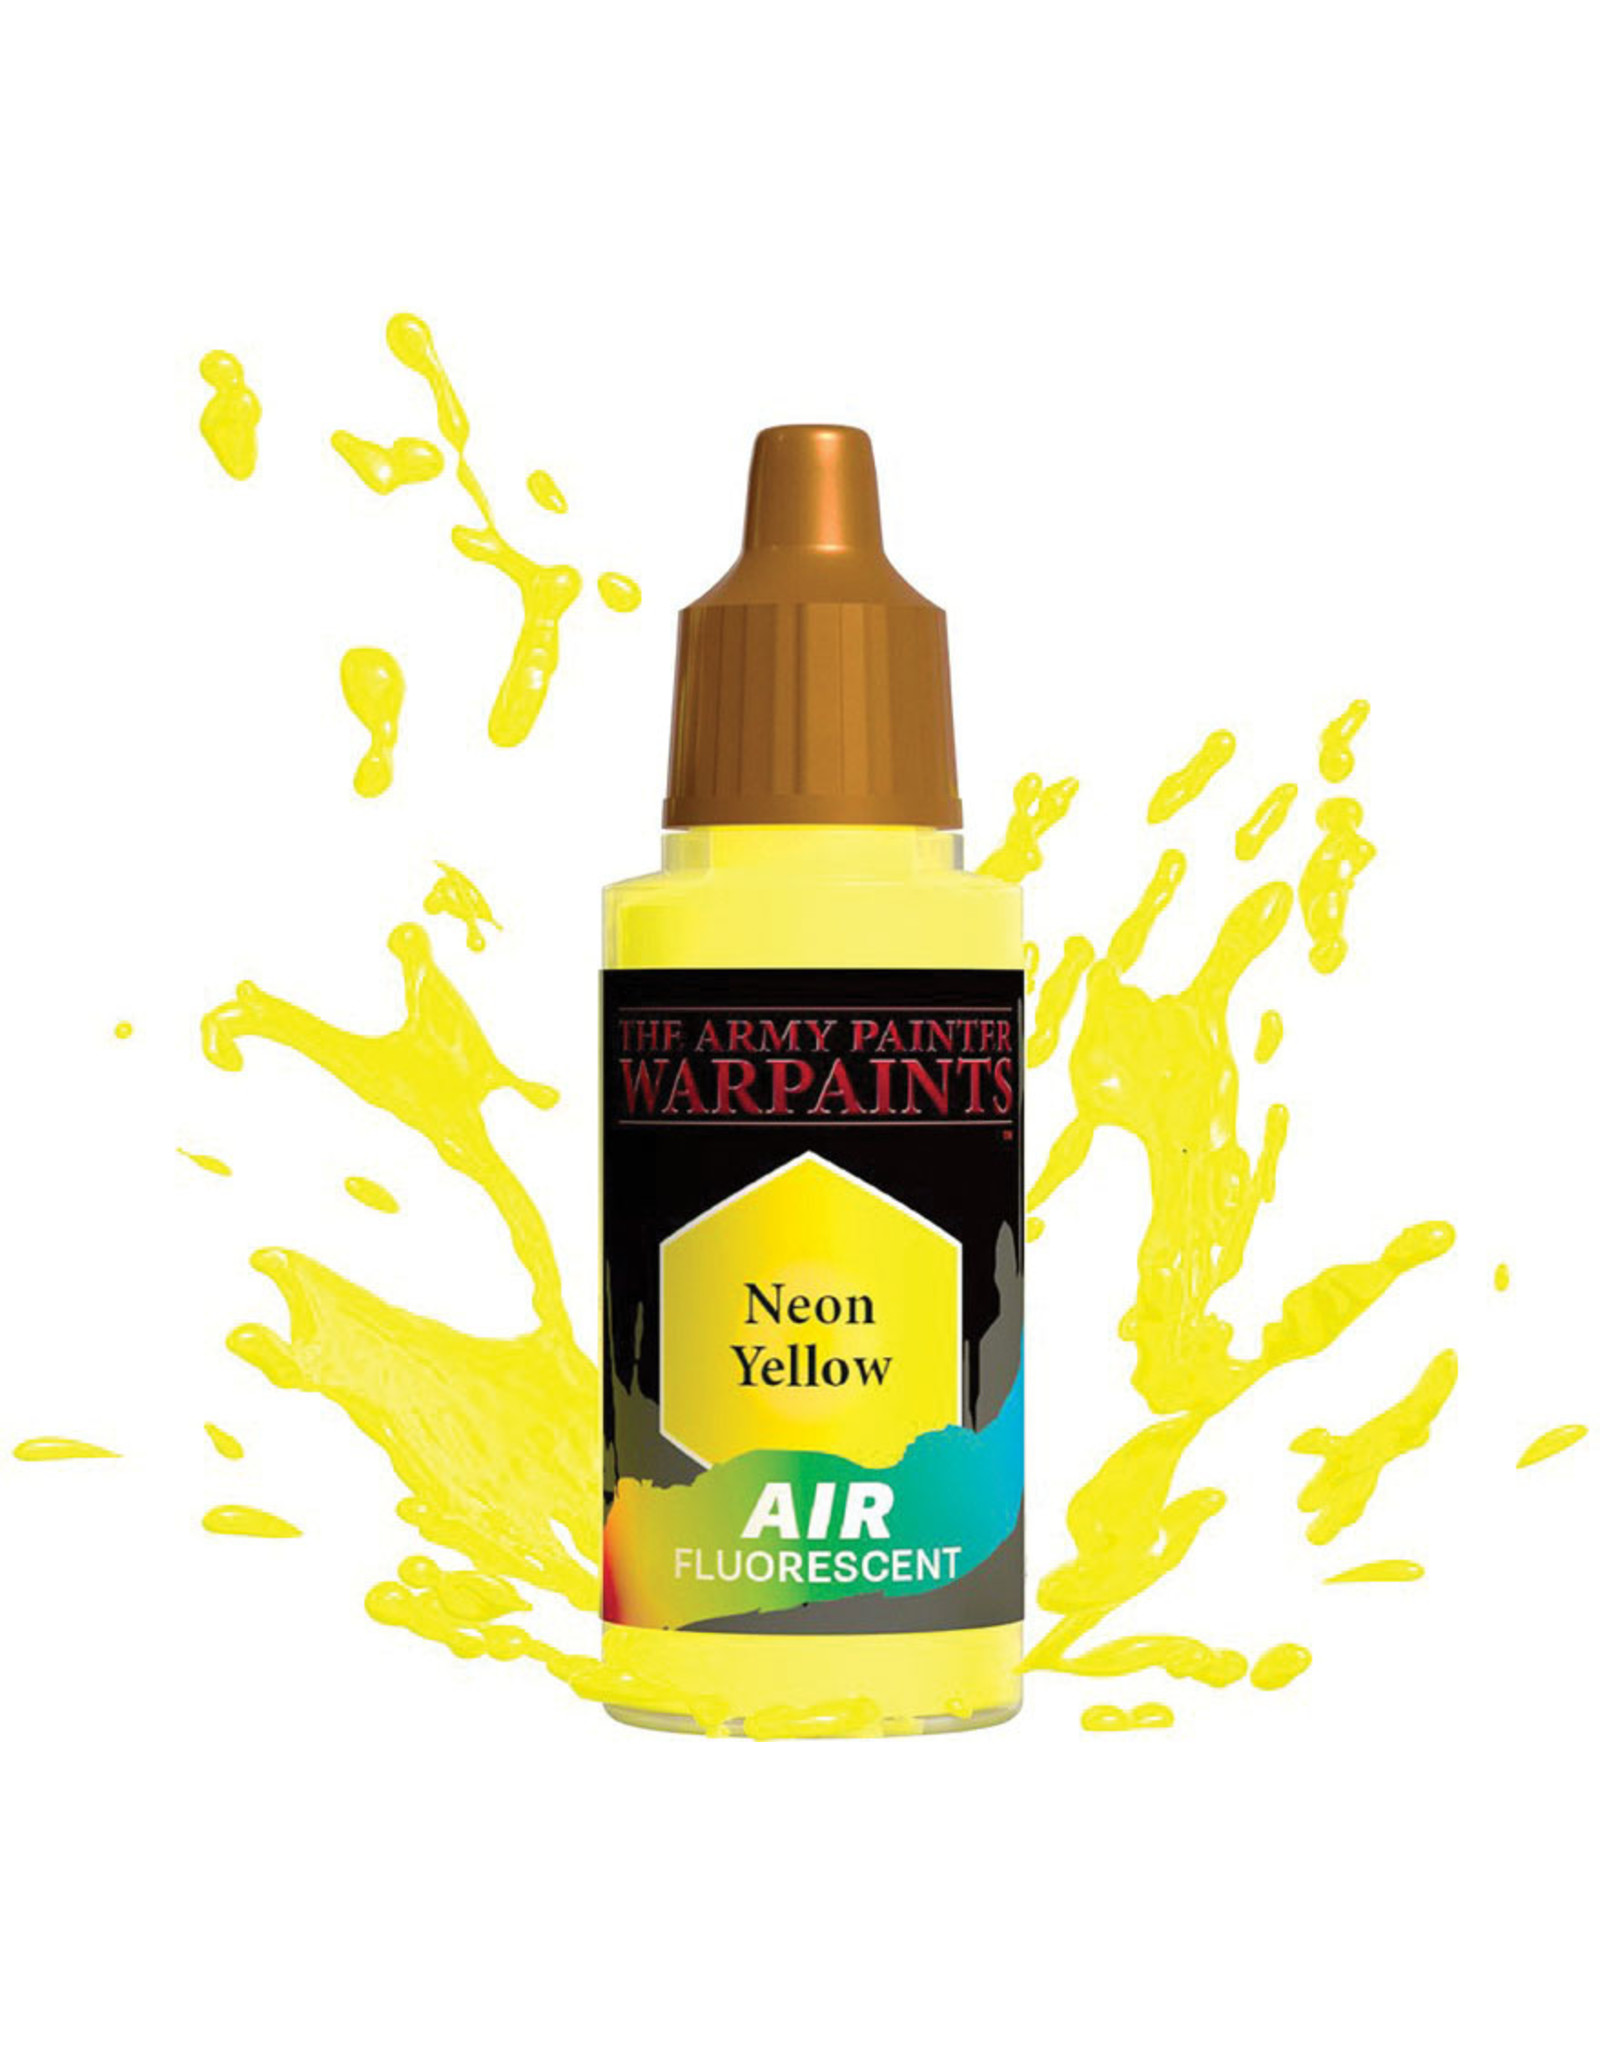 Army Painter Warpaint Air: Flourescent- Neon Yellow, 18ml.